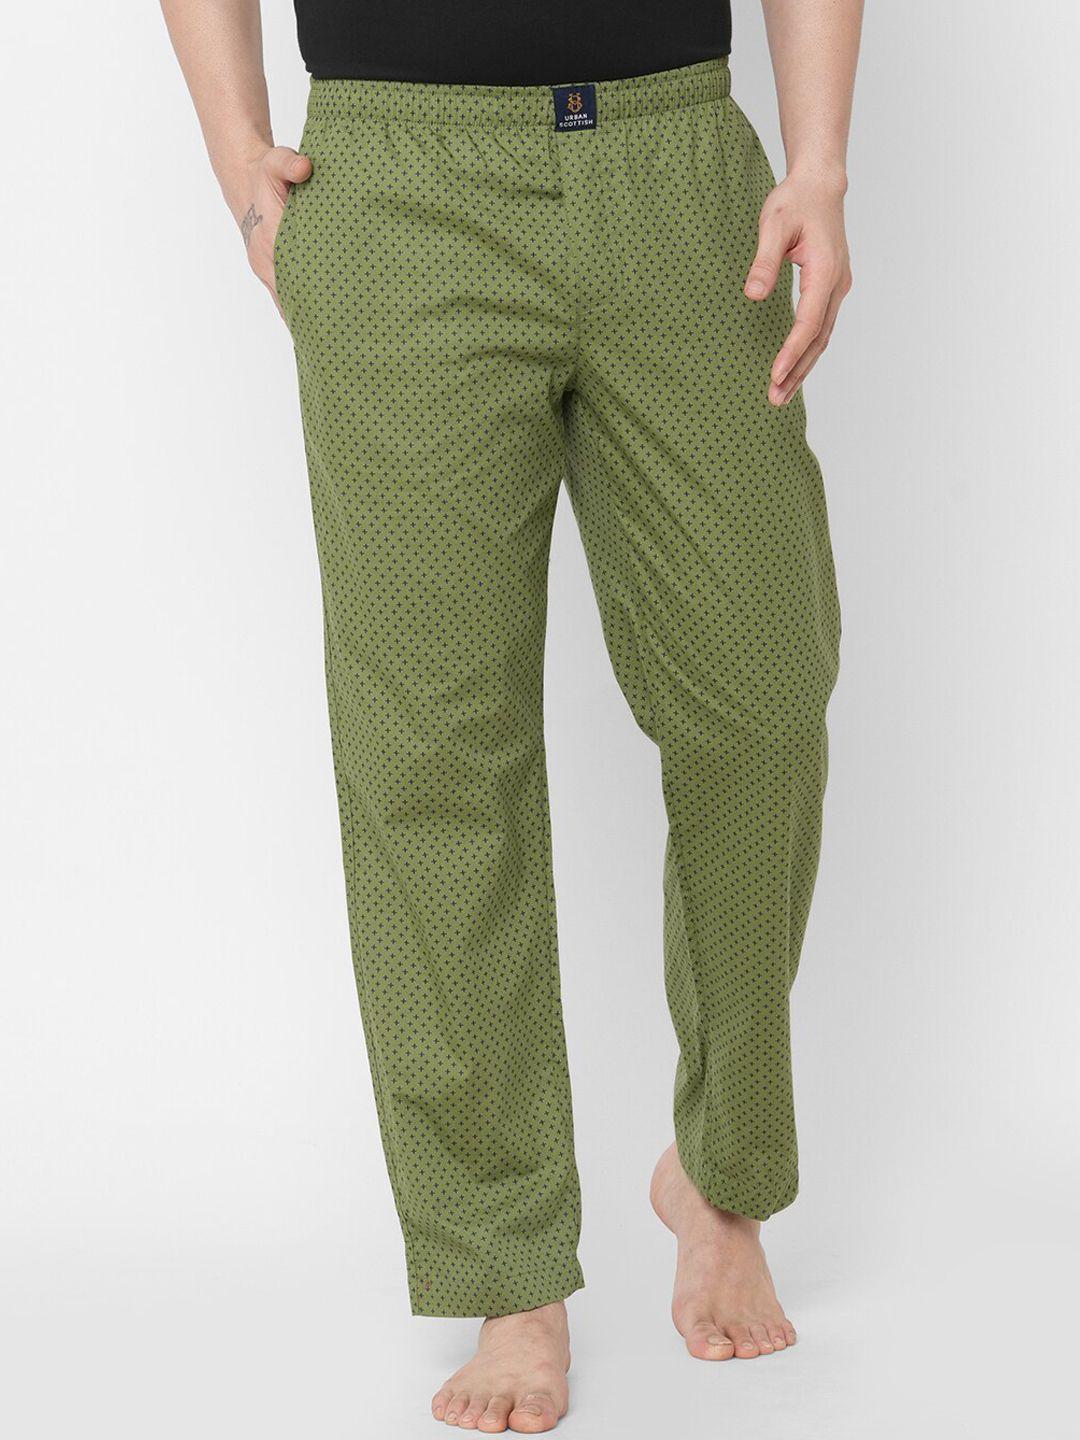 urban scottish men olive green printed pure cotton lounge pants